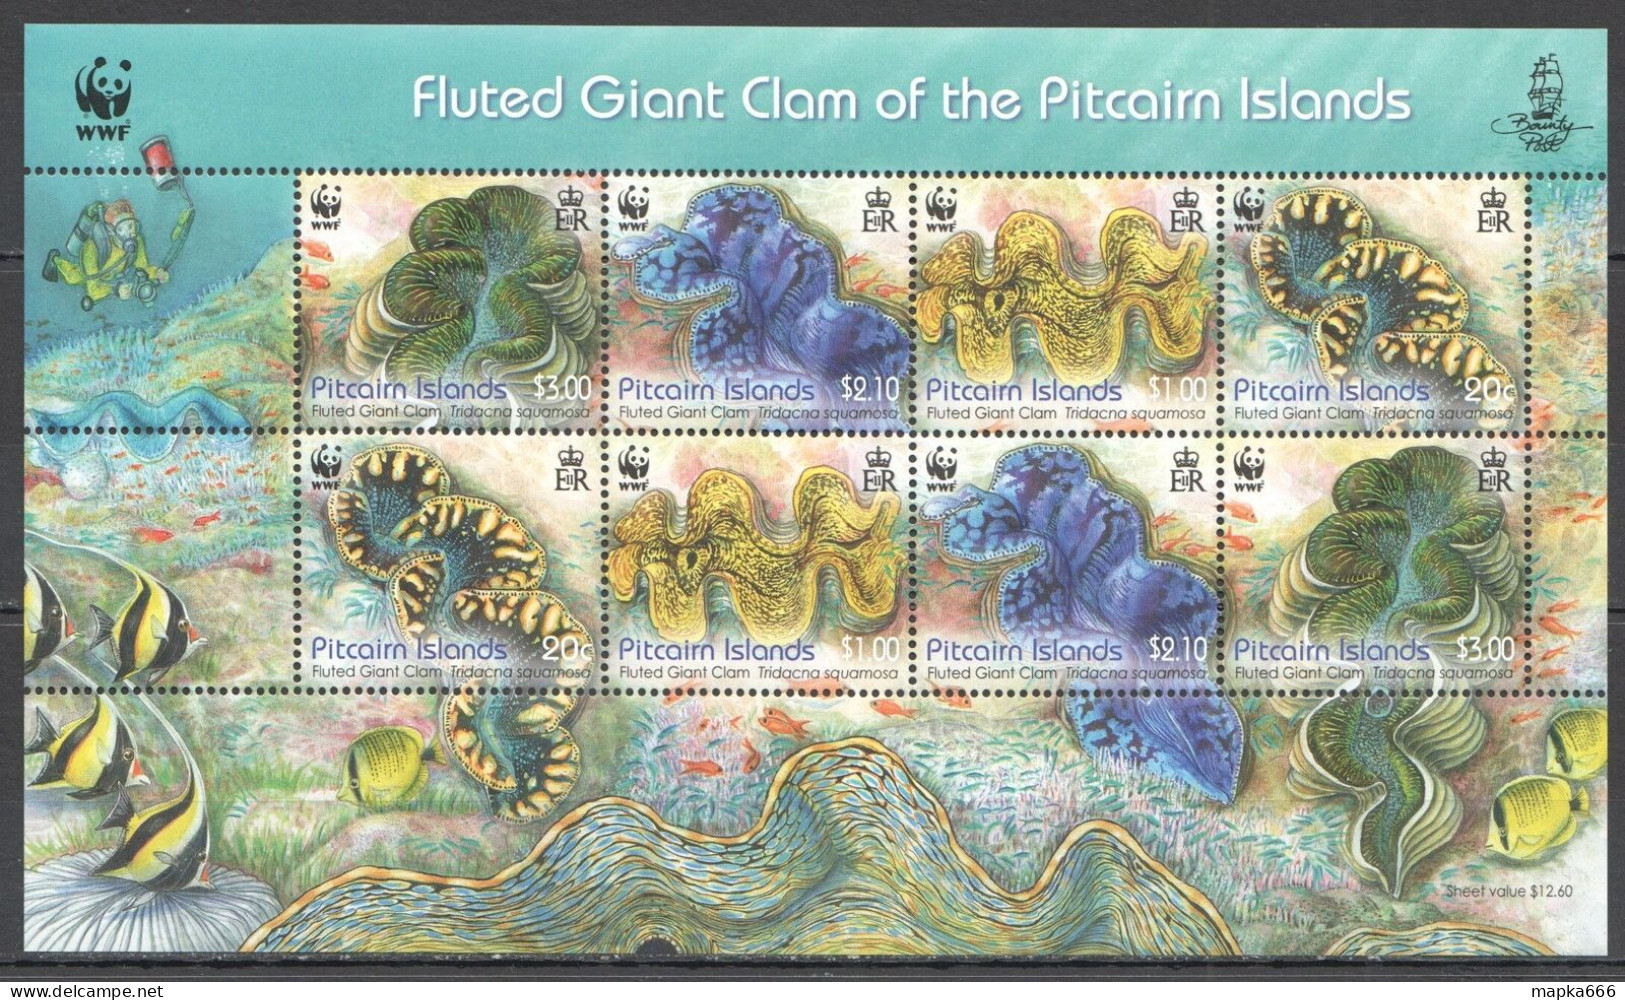 Ft103 2012 Pitcairn Islands Wwf Fluted Giant Clam Michel 25 Euro #865-8 1Kb Mnh - Vita Acquatica